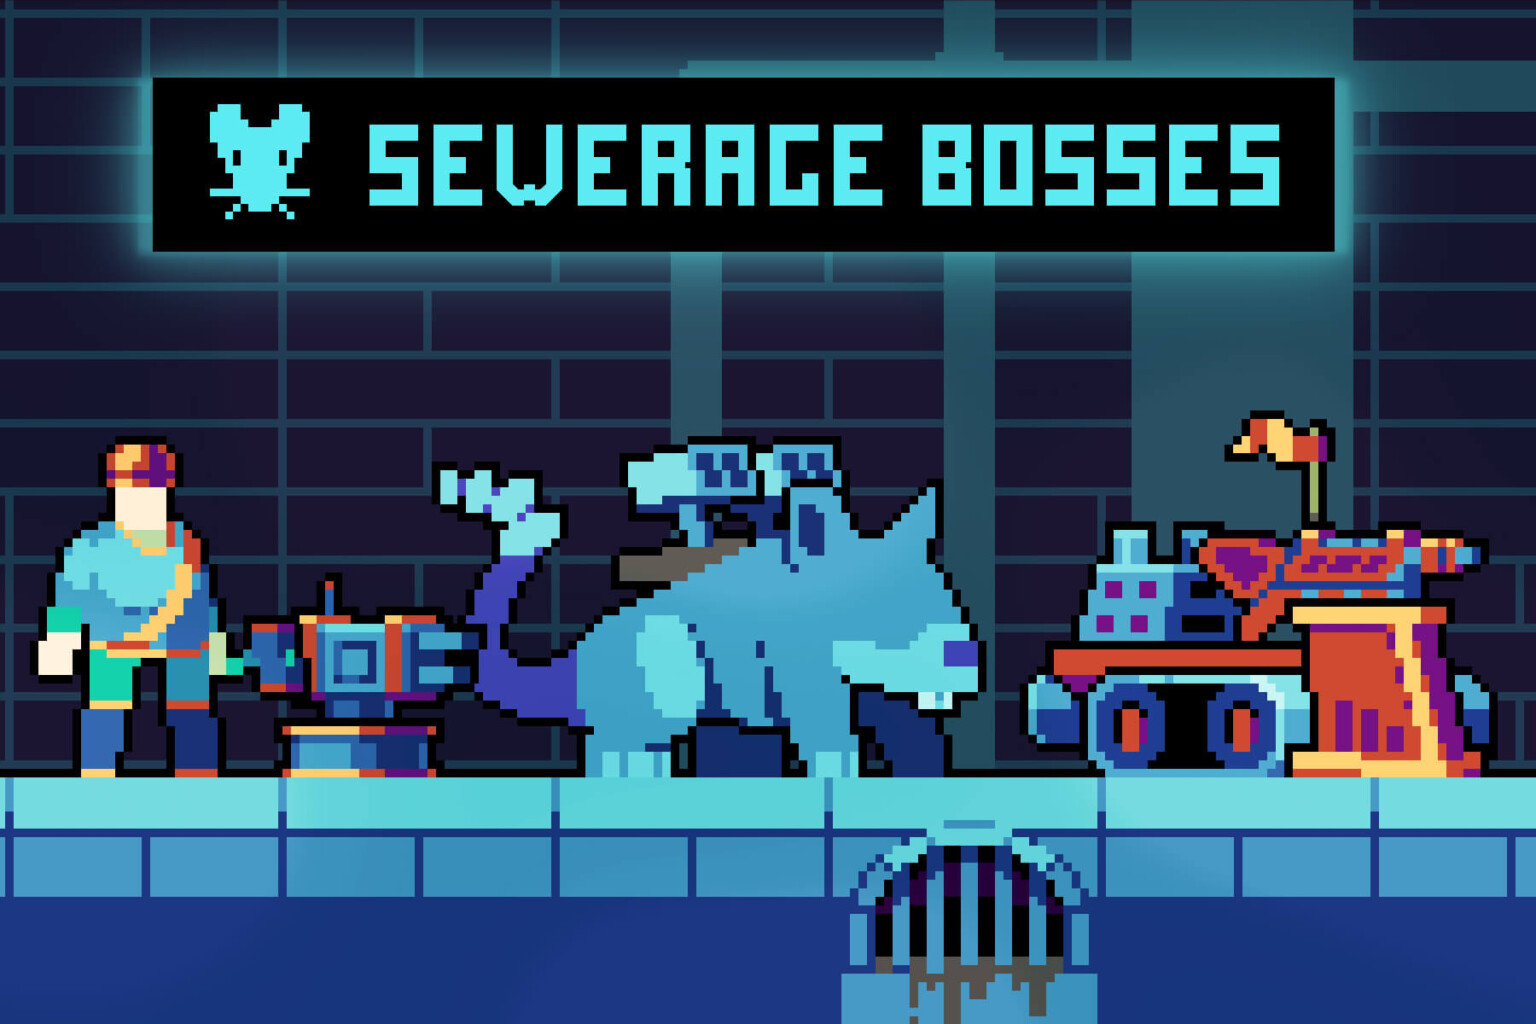 Sewerage Character Bosses Pixel Art Craftpix Net